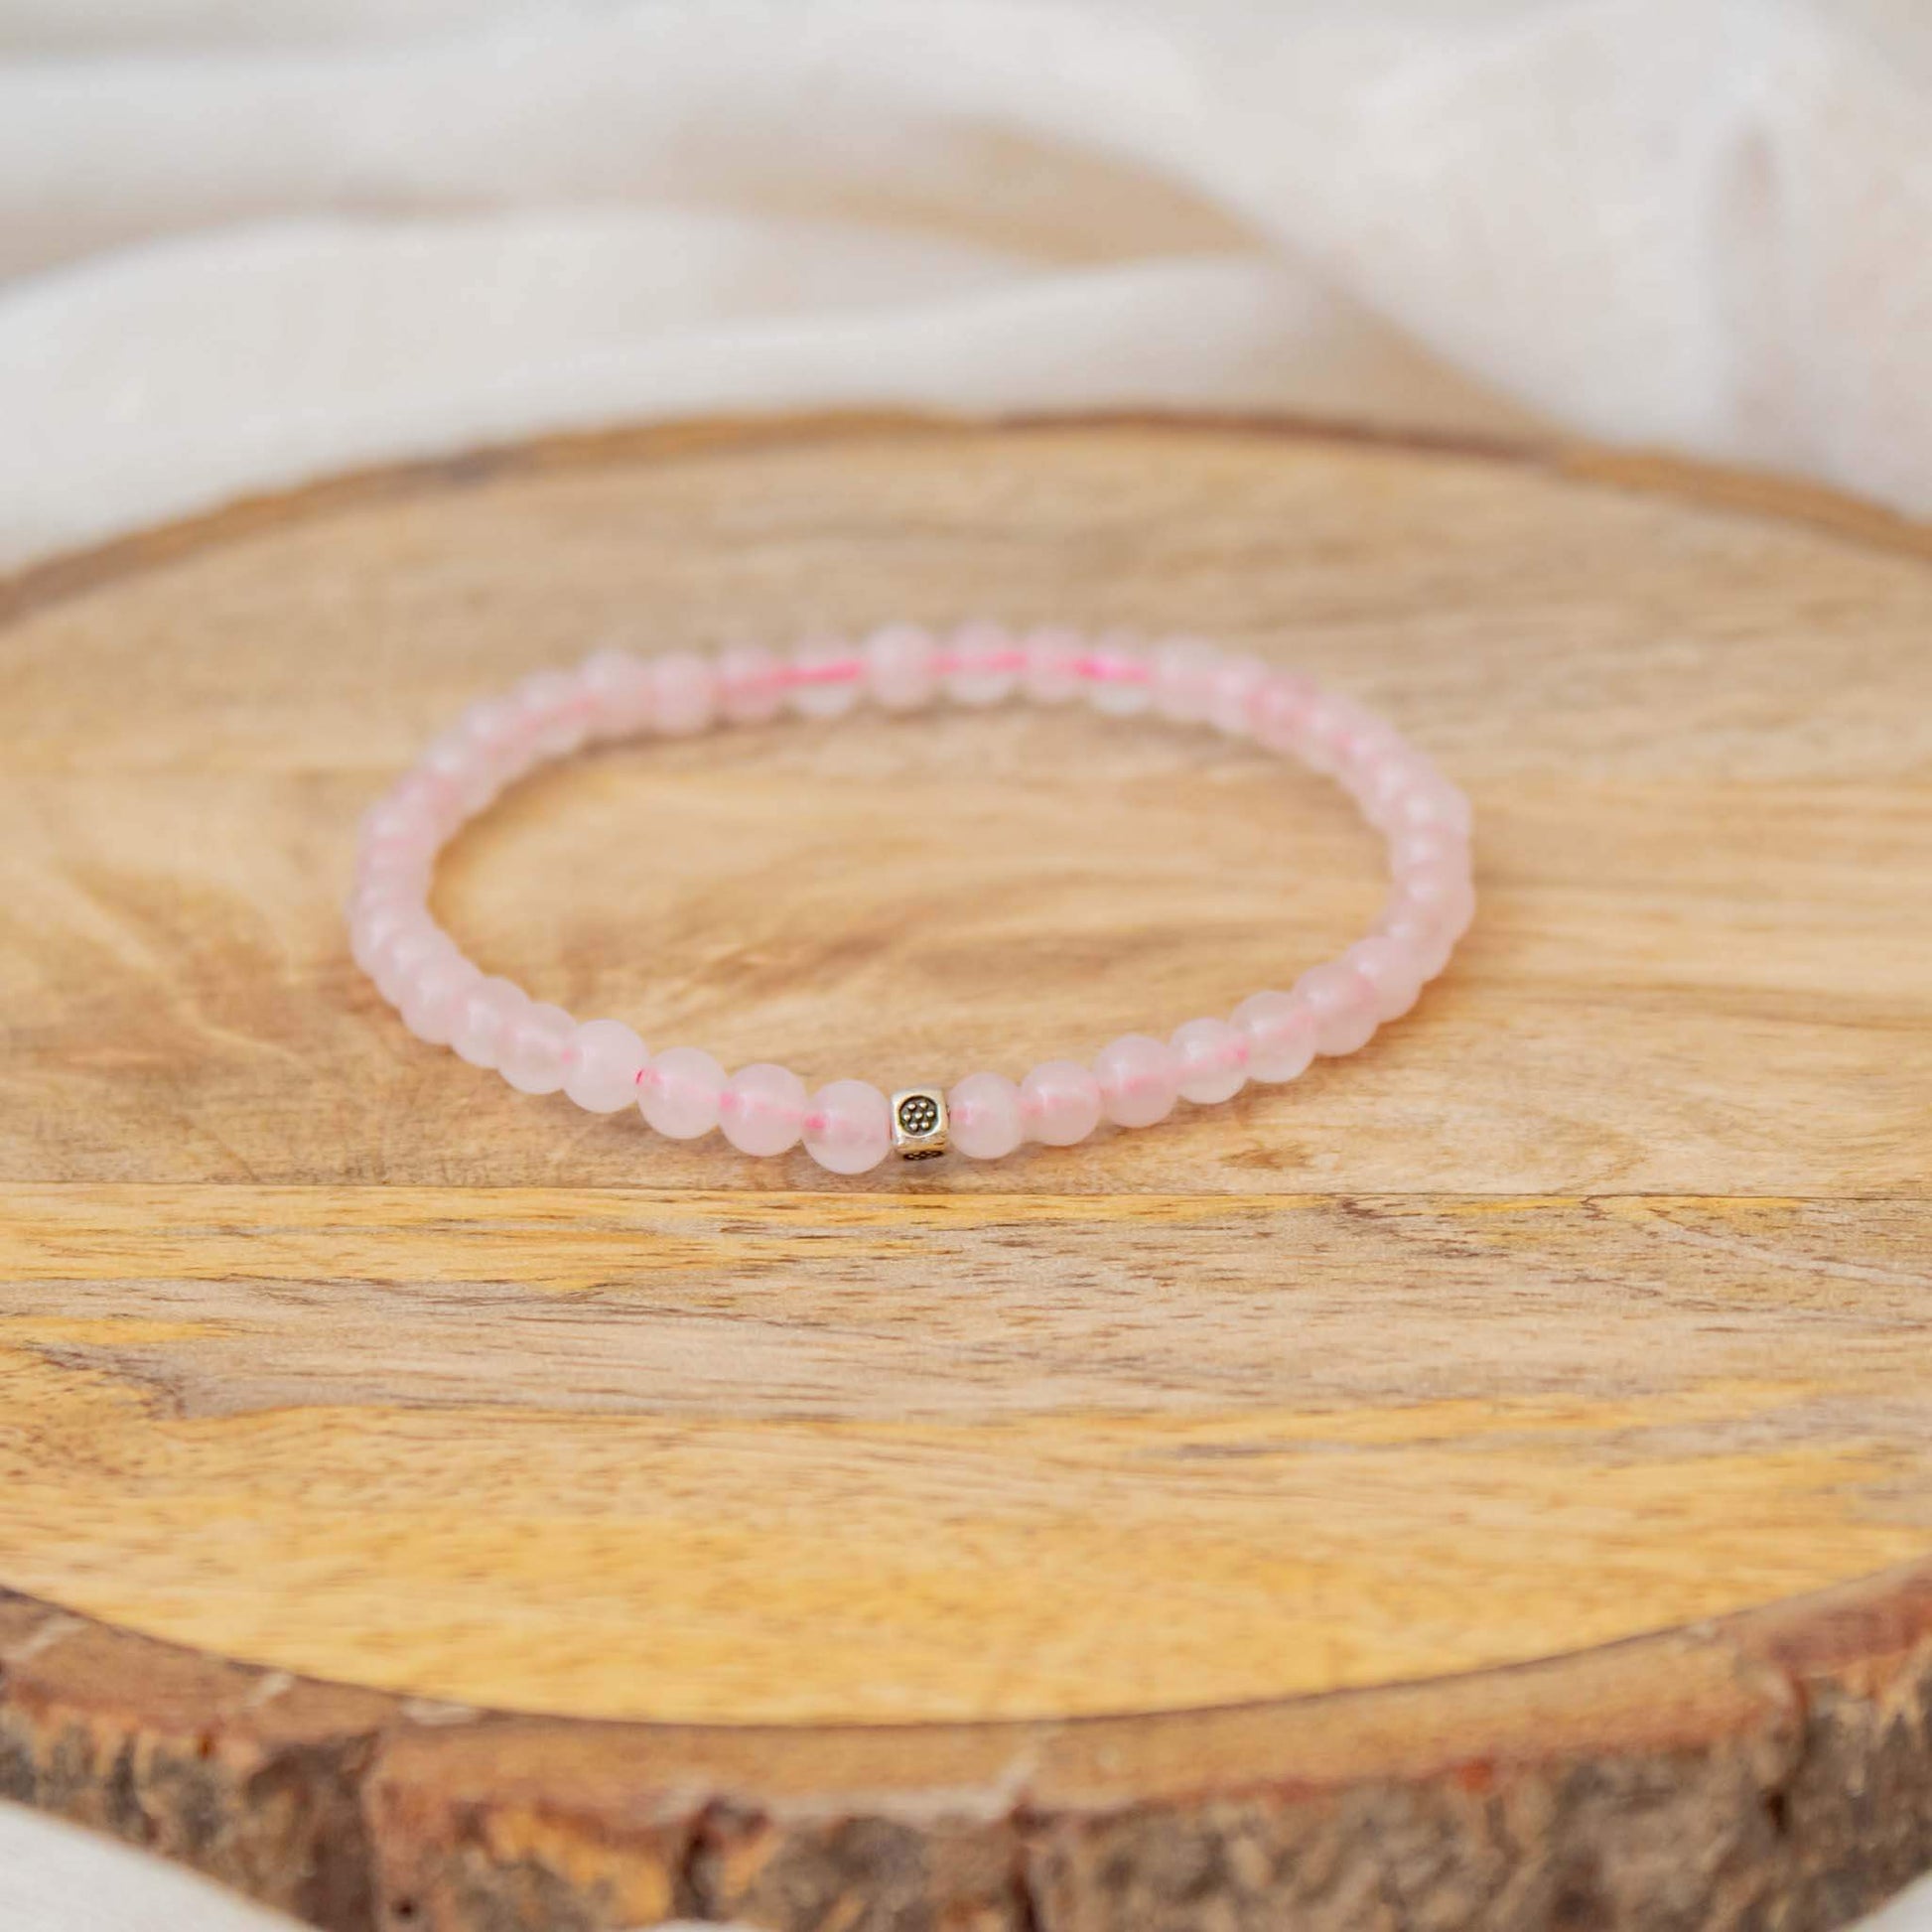 4mm rose quartz bracelet with charm